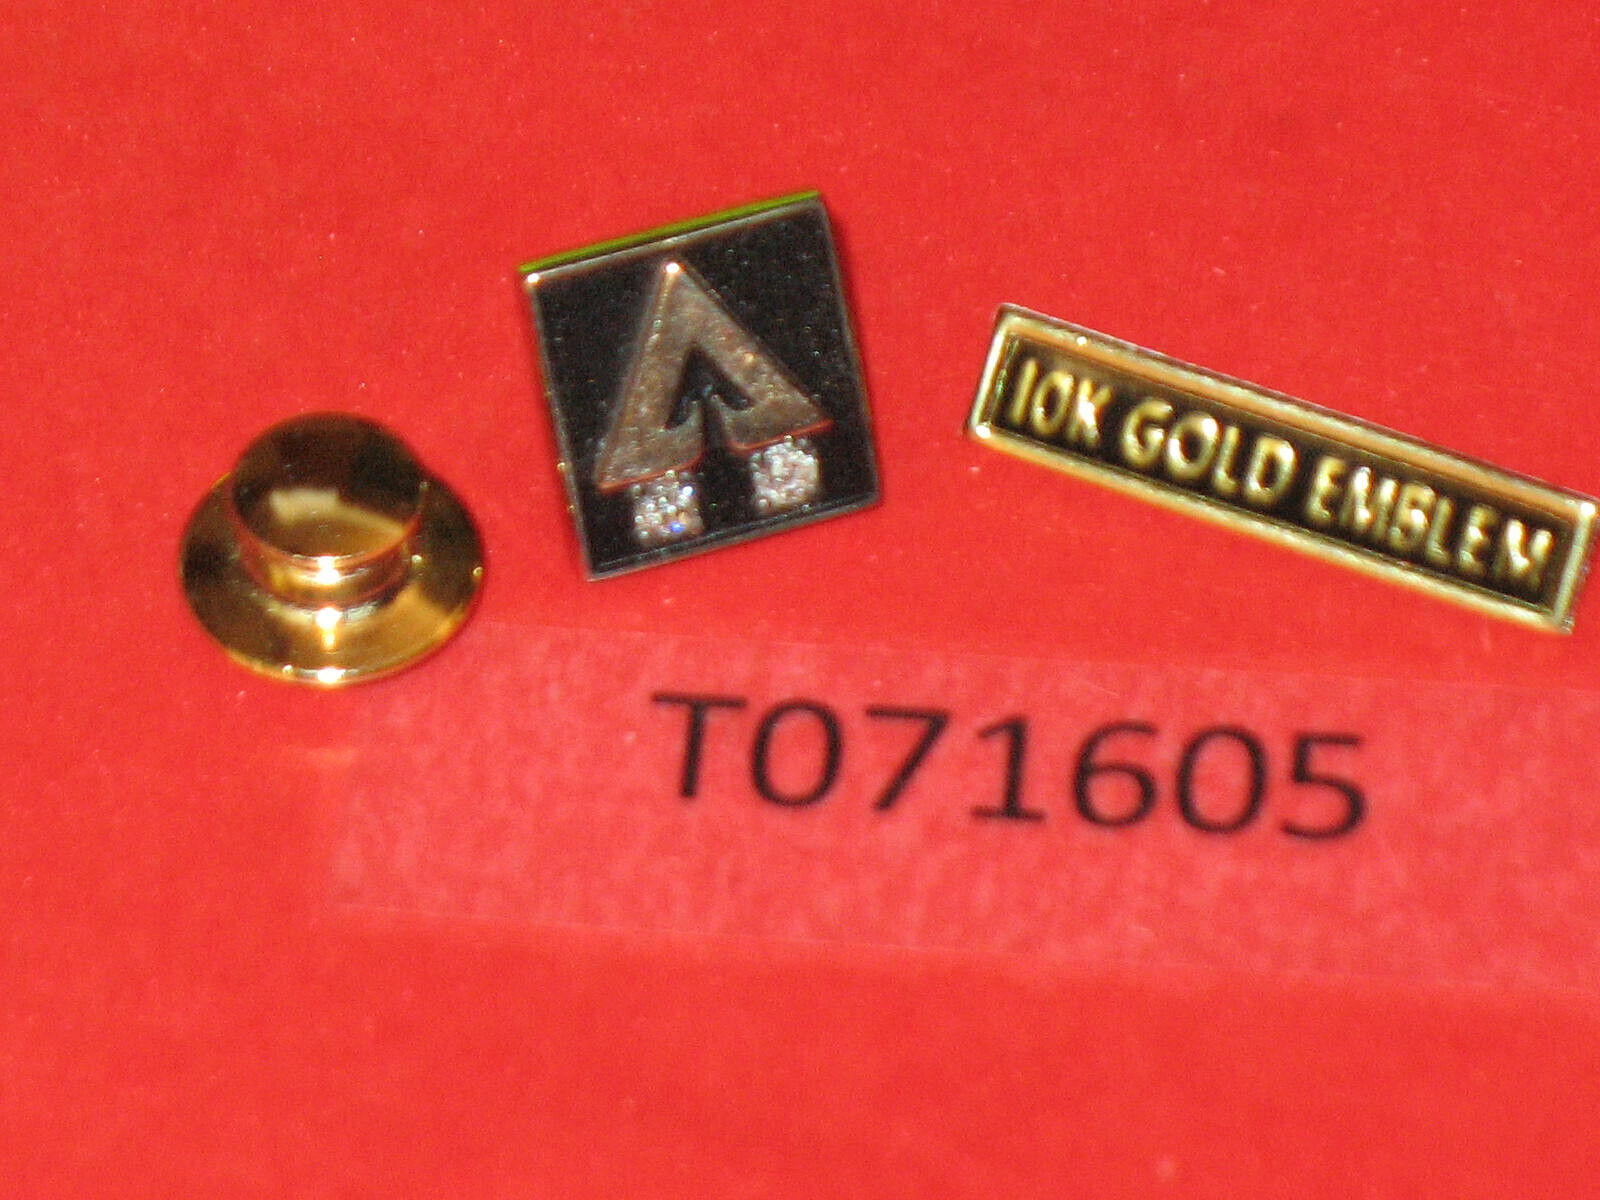 Weyerhaeuser Lumber tie tack 10K yellow gold emblem 2 Diamond, employee service